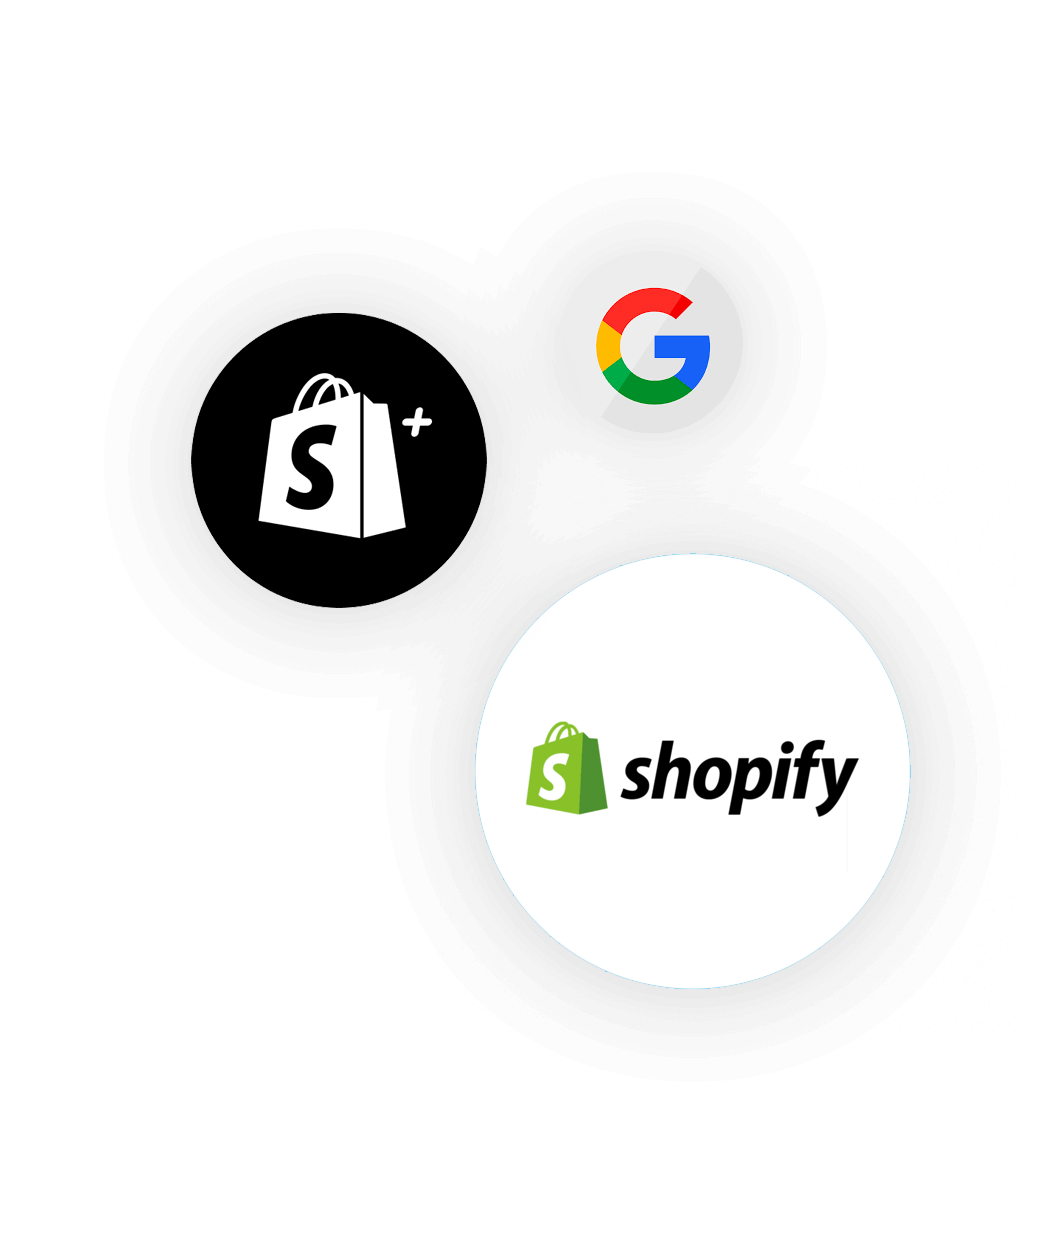 headless Shopify agency partners